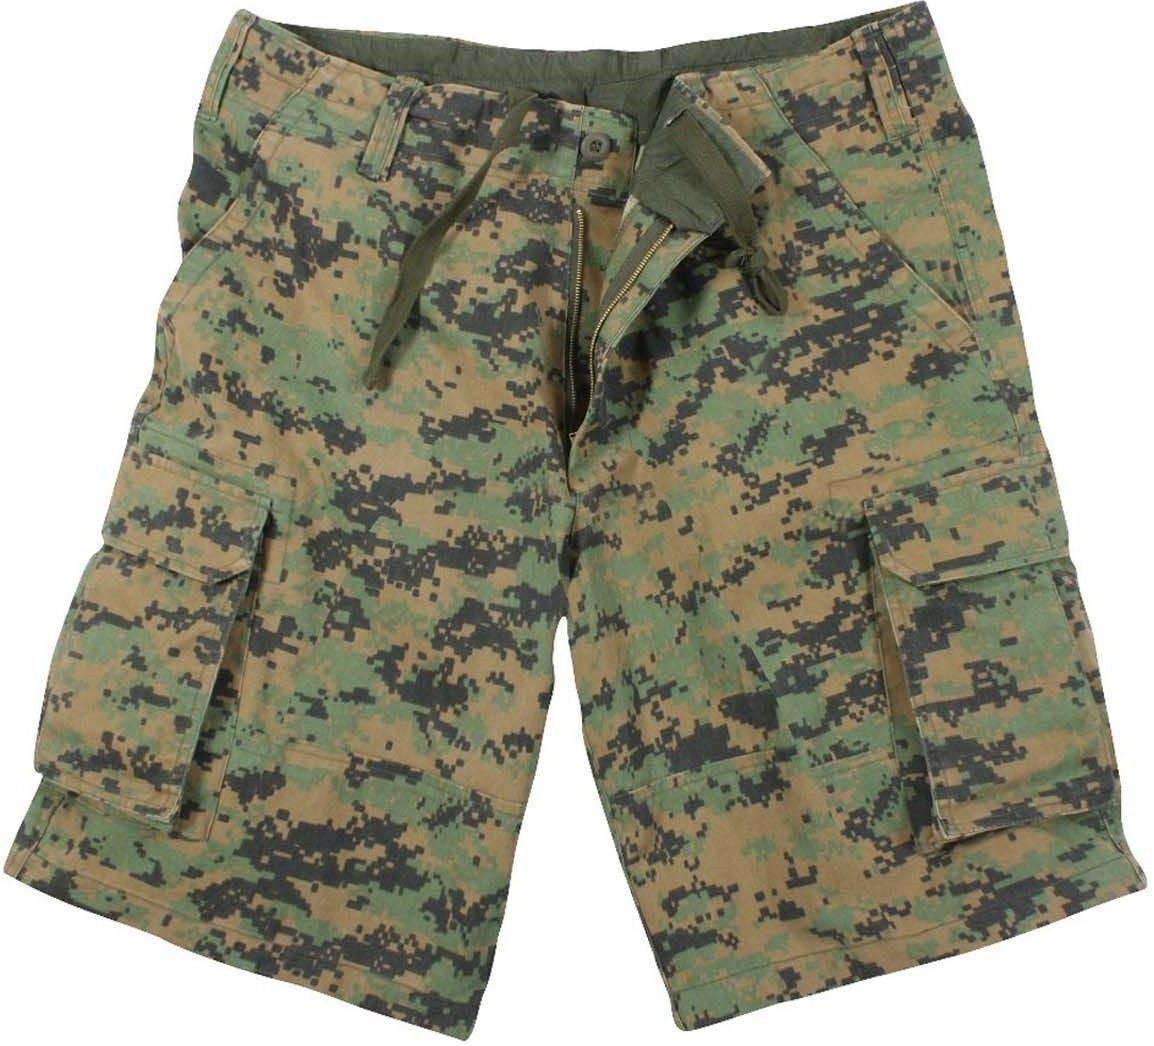 Vintage Infantry Cargo Shorts - Utility Digital Camo Shorts - Relaxed ...